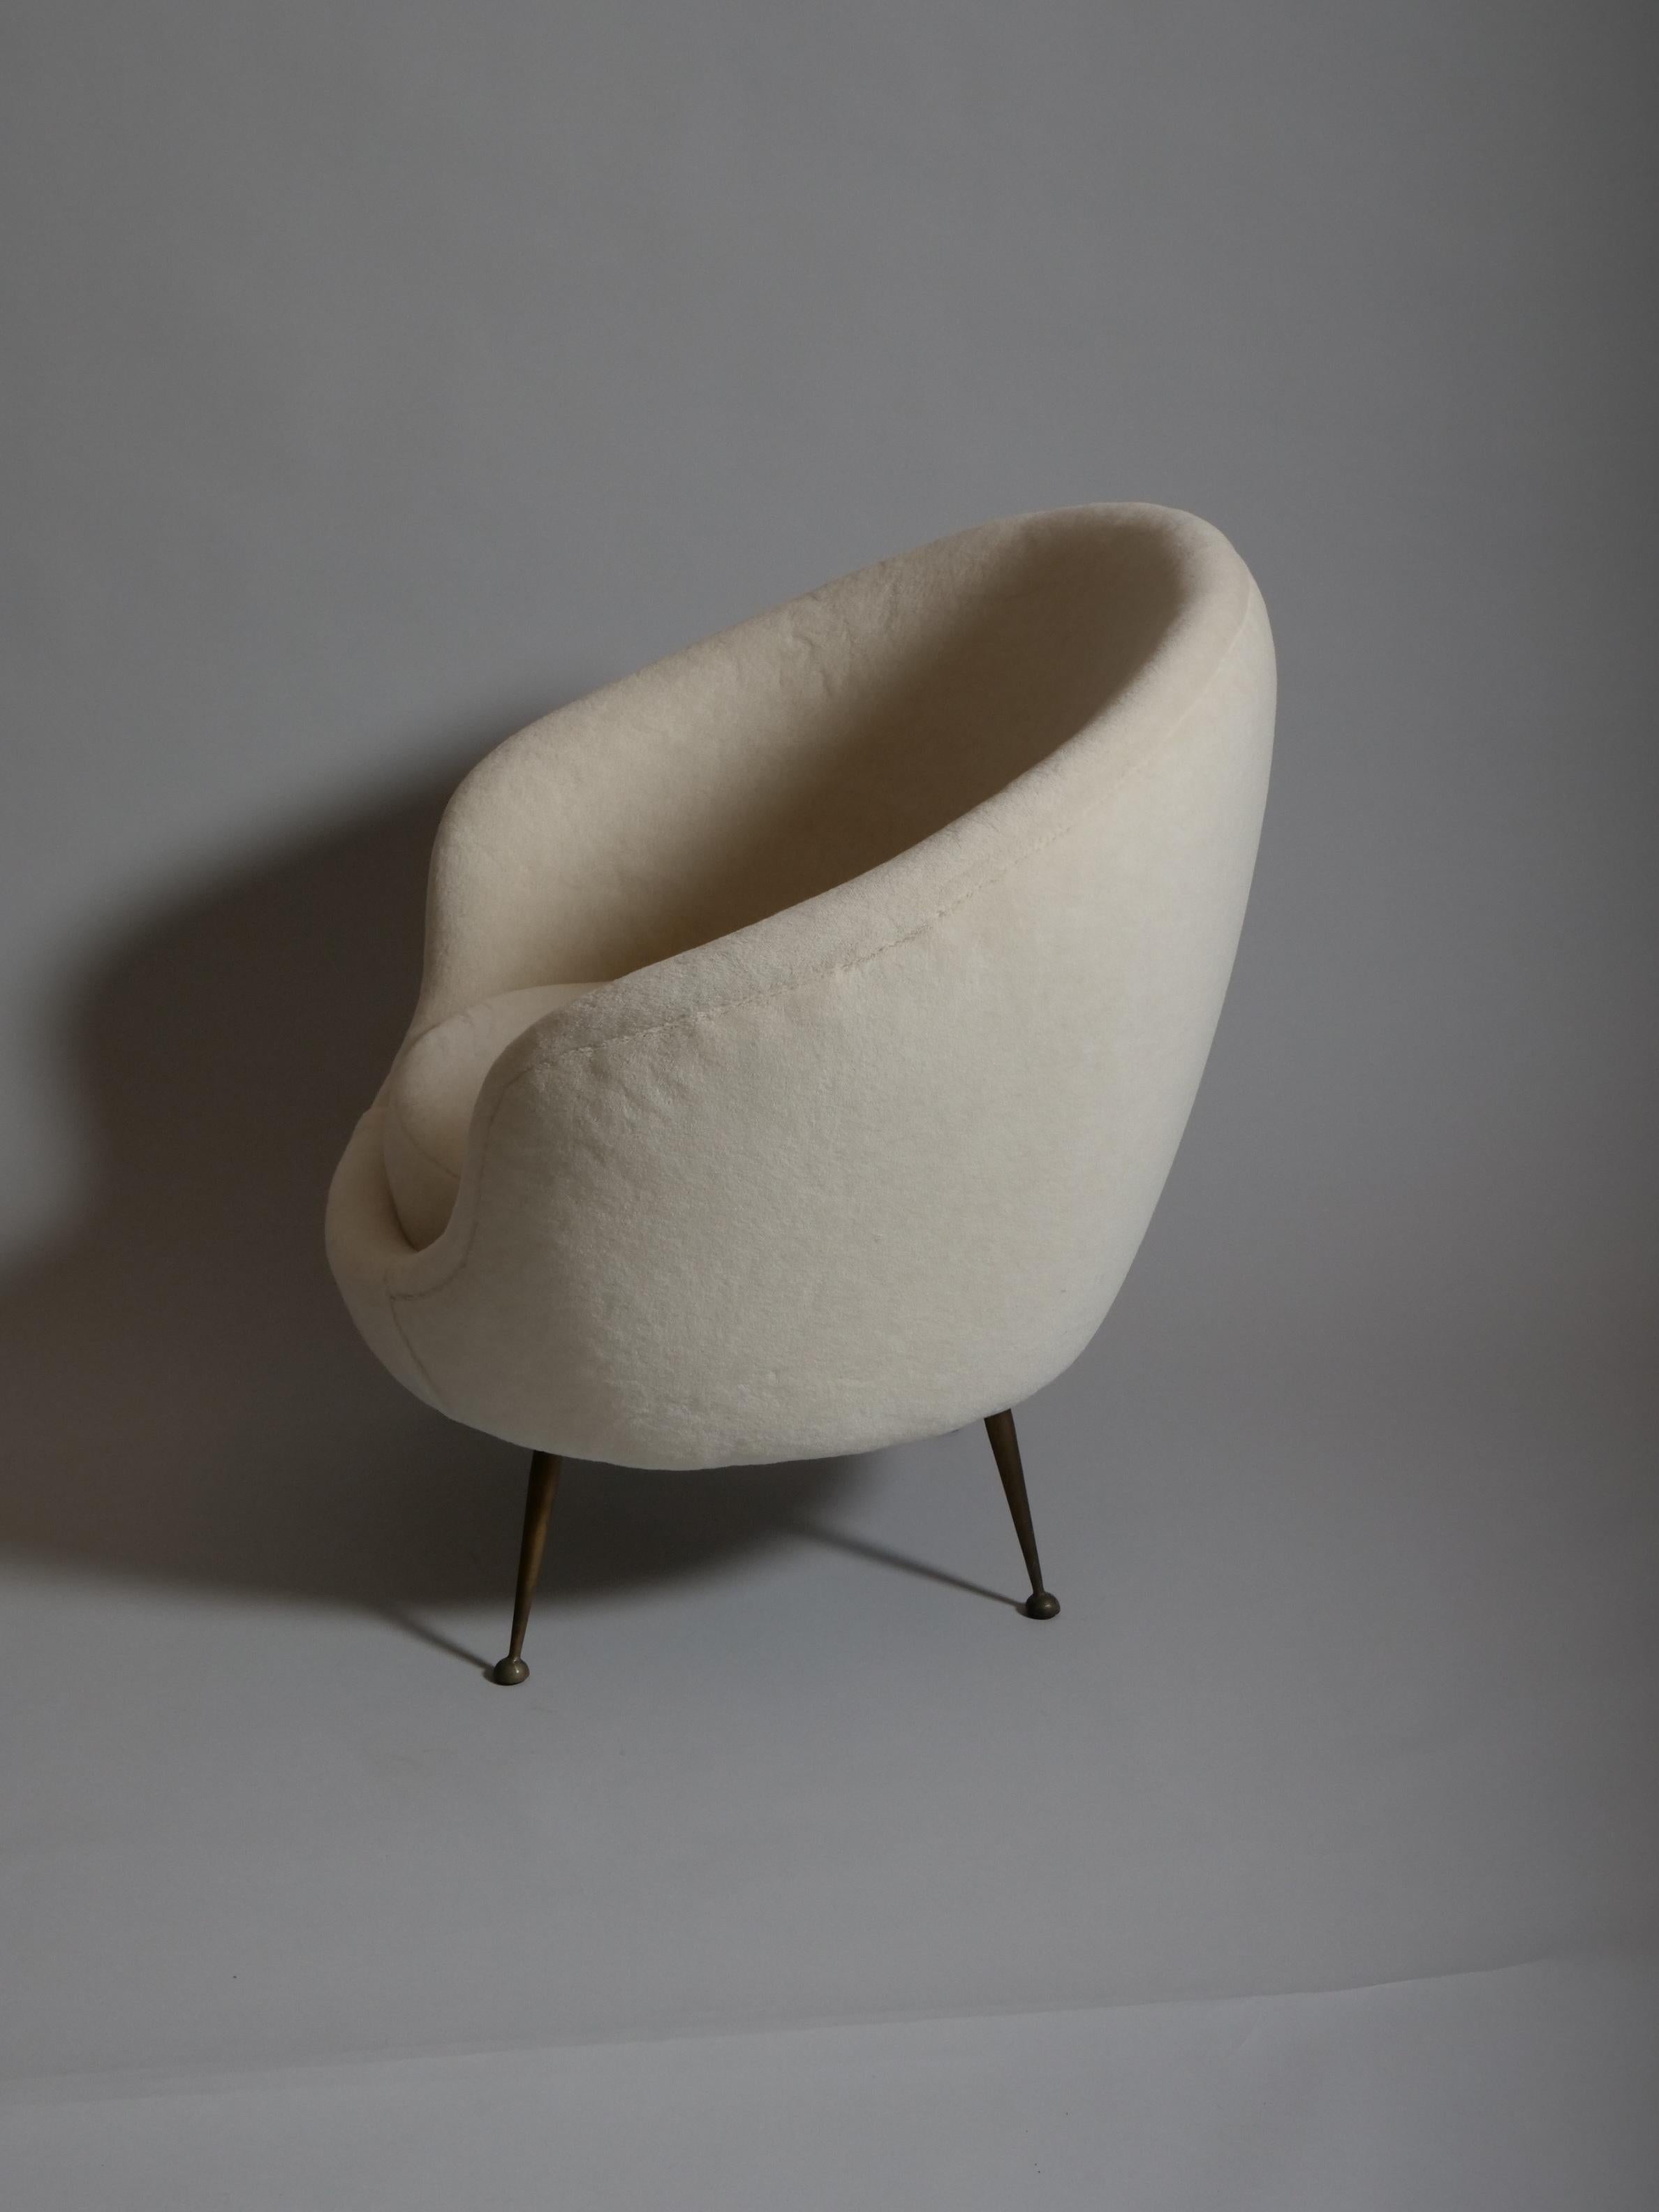 Pair Italian mid century egg shape chairs. Re upholstered in Alpaca wool velvet For Sale 1